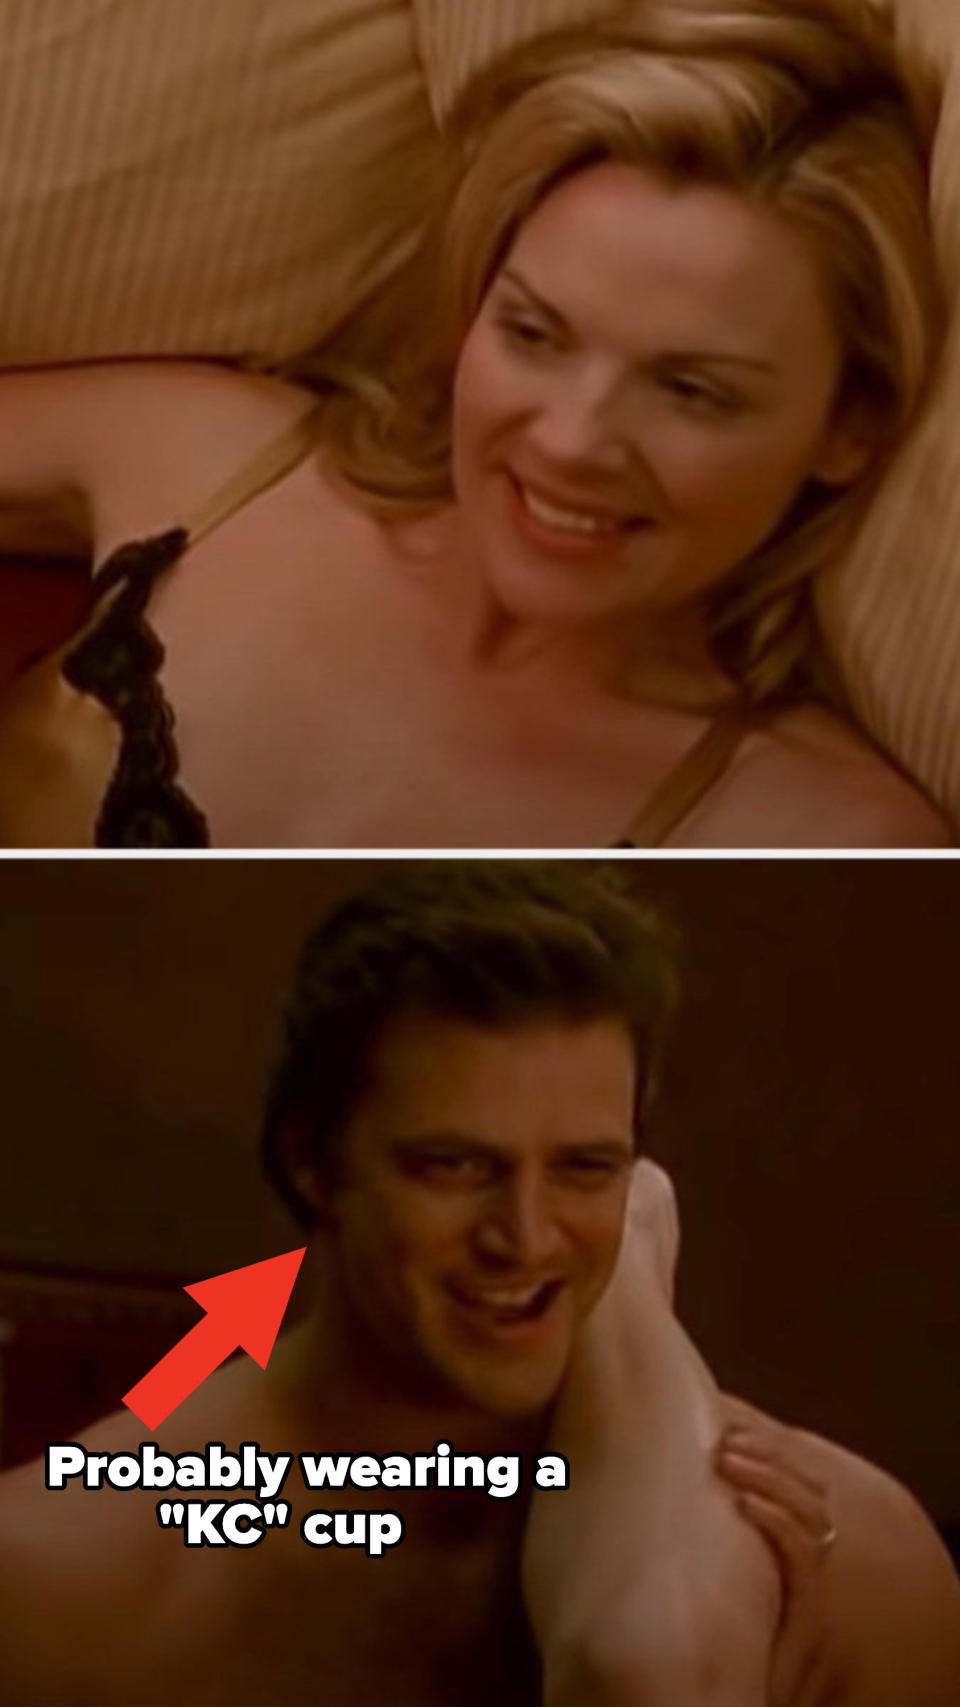 Samantha having sex with "Mr. Cocky"